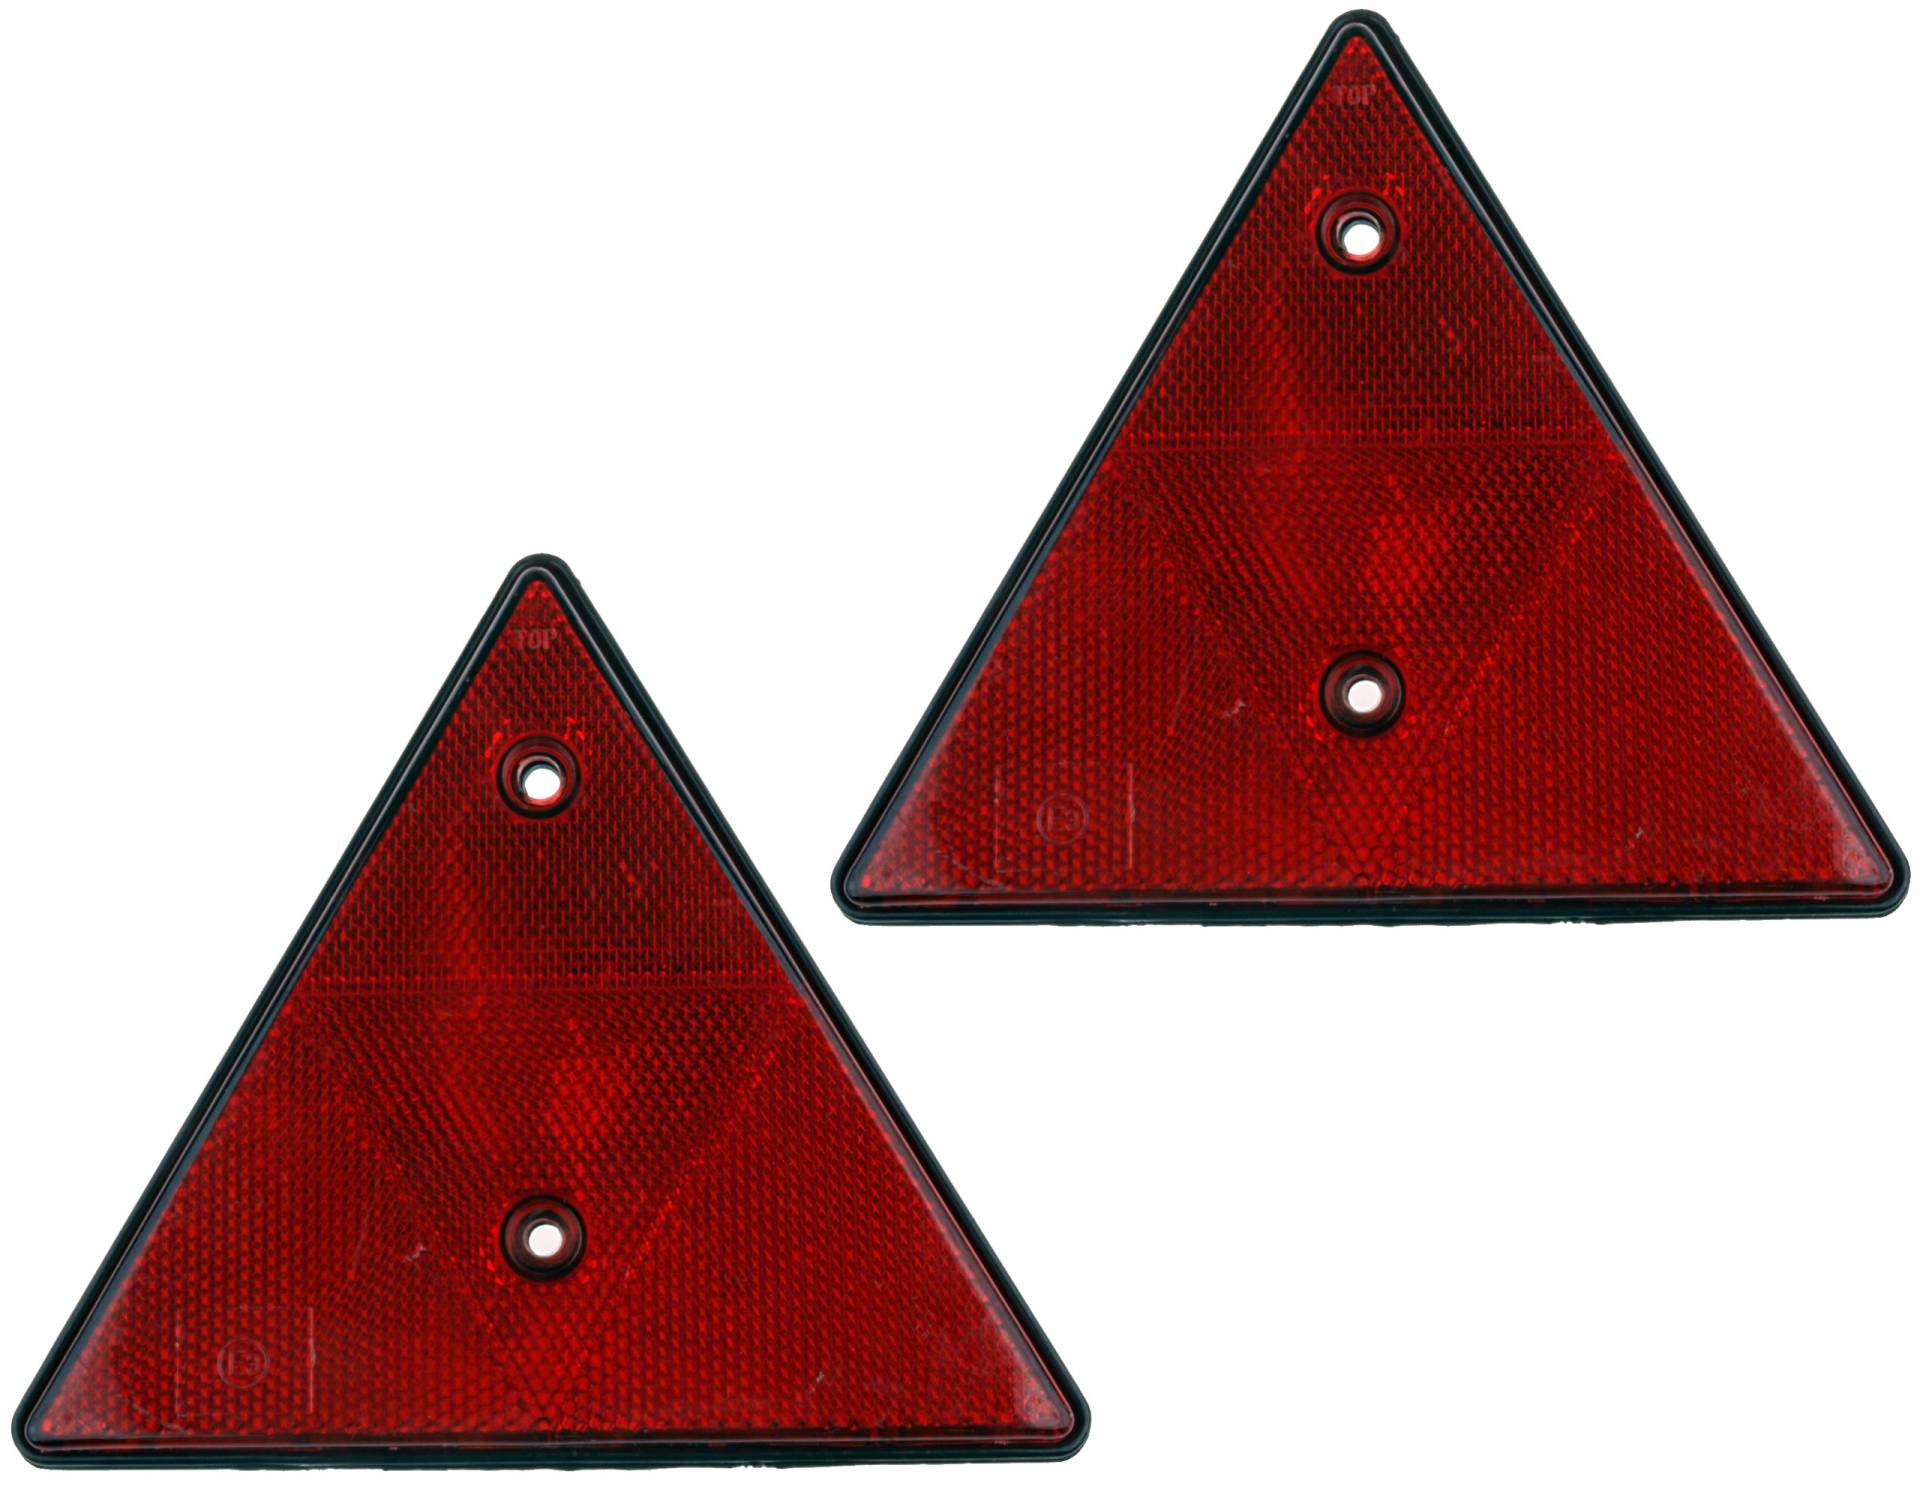 WAMO Dreieck Rückstrahler Anhängerrückstrahler Set 2 Stück von WAMO Beleuchtungen und Reflektoren